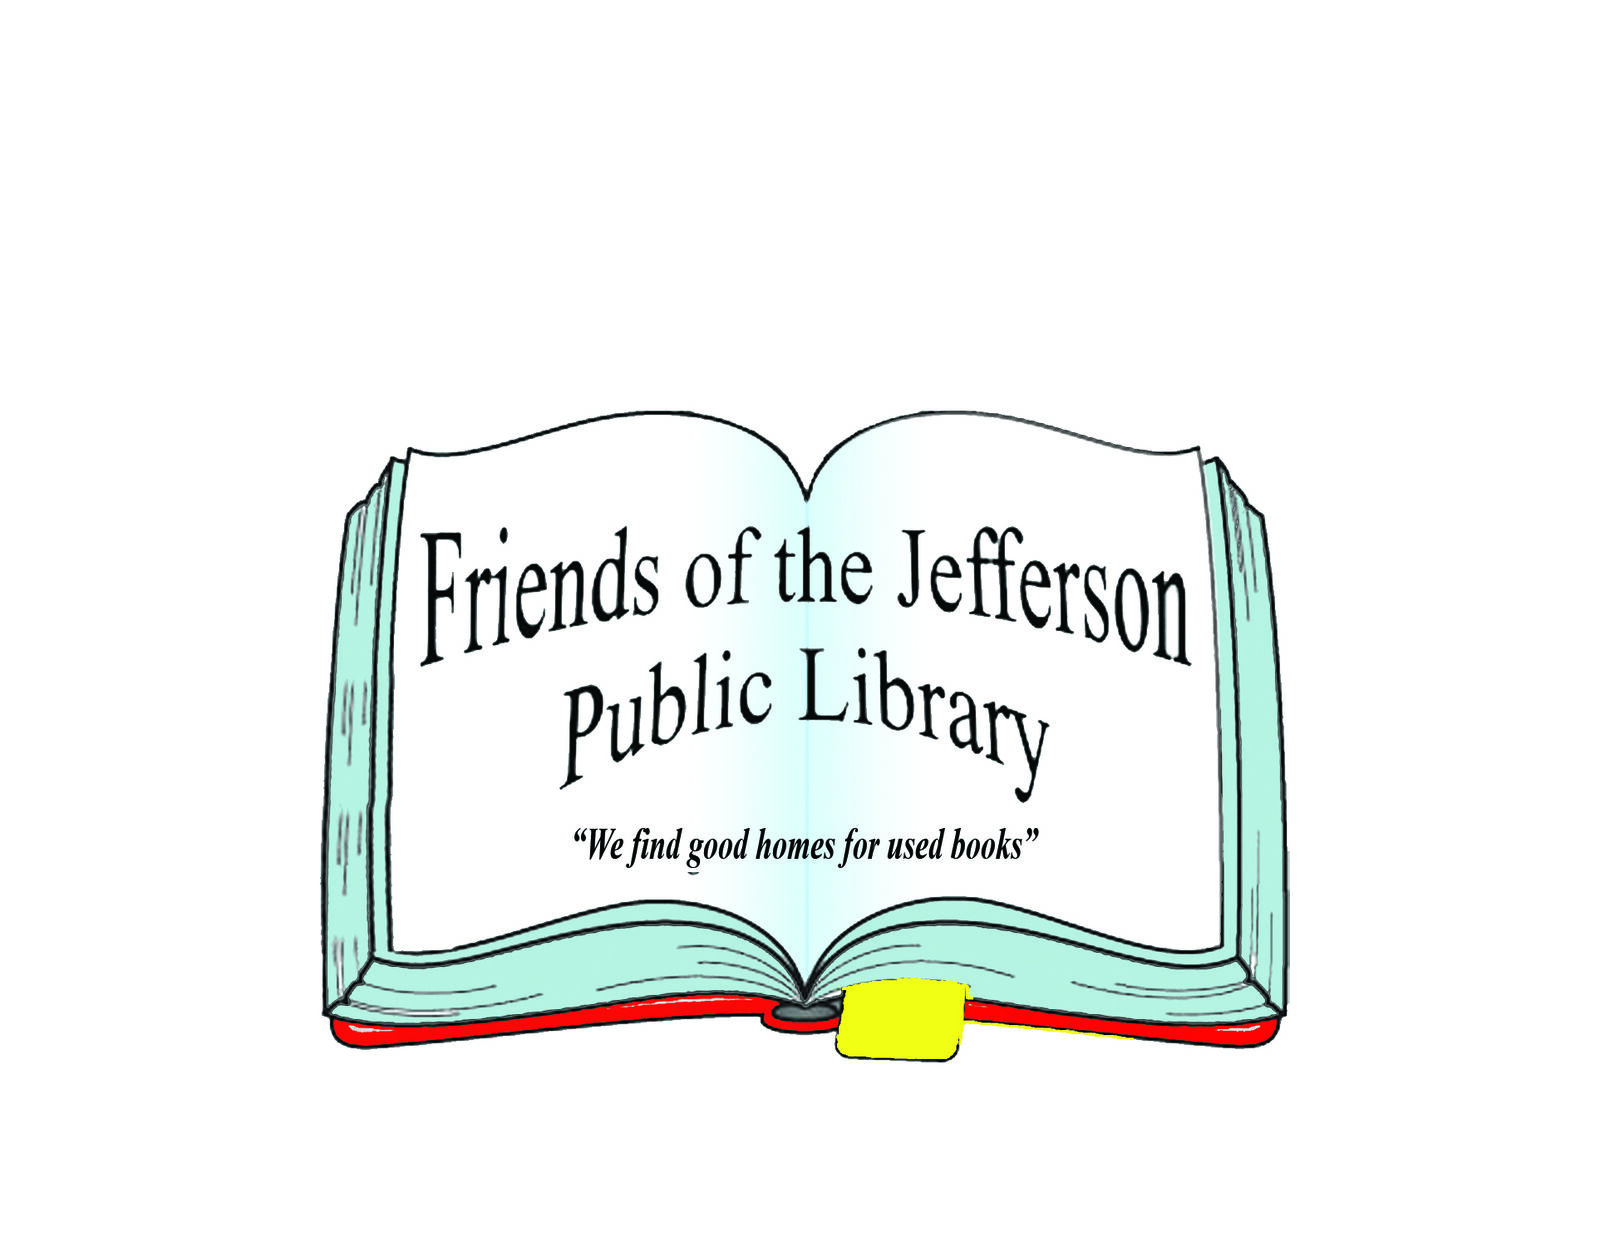 Friends of the Jefferson Public Library